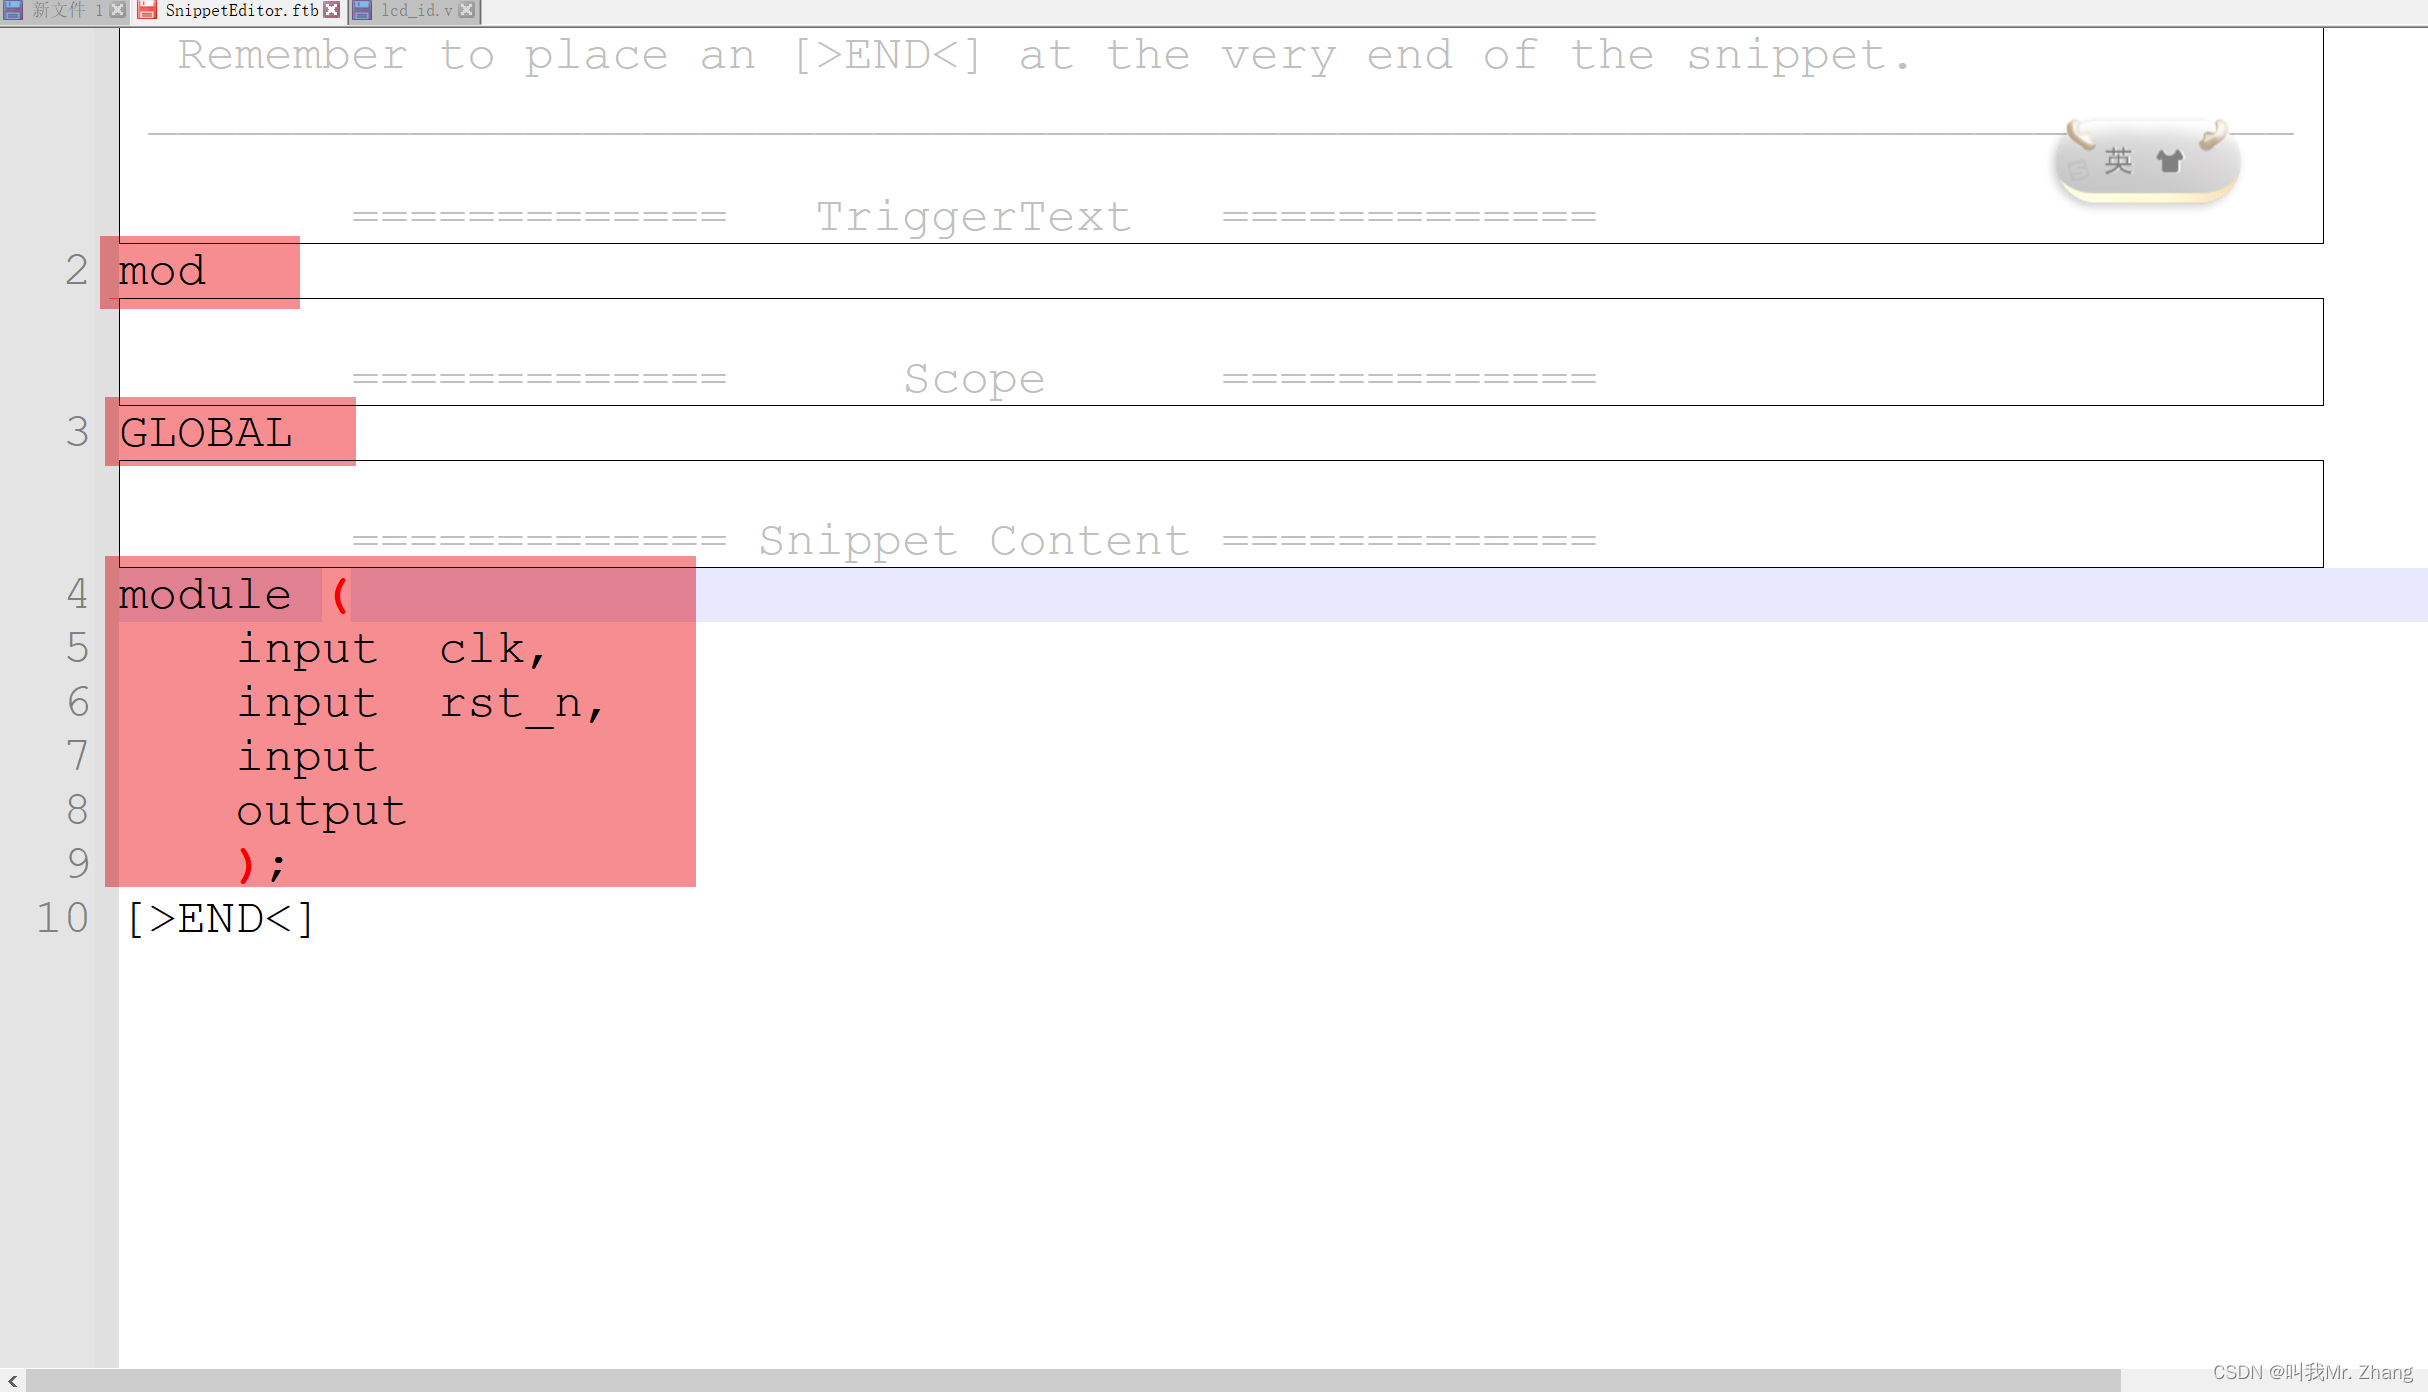 notepad++: 插件fingertext 来创建代码块